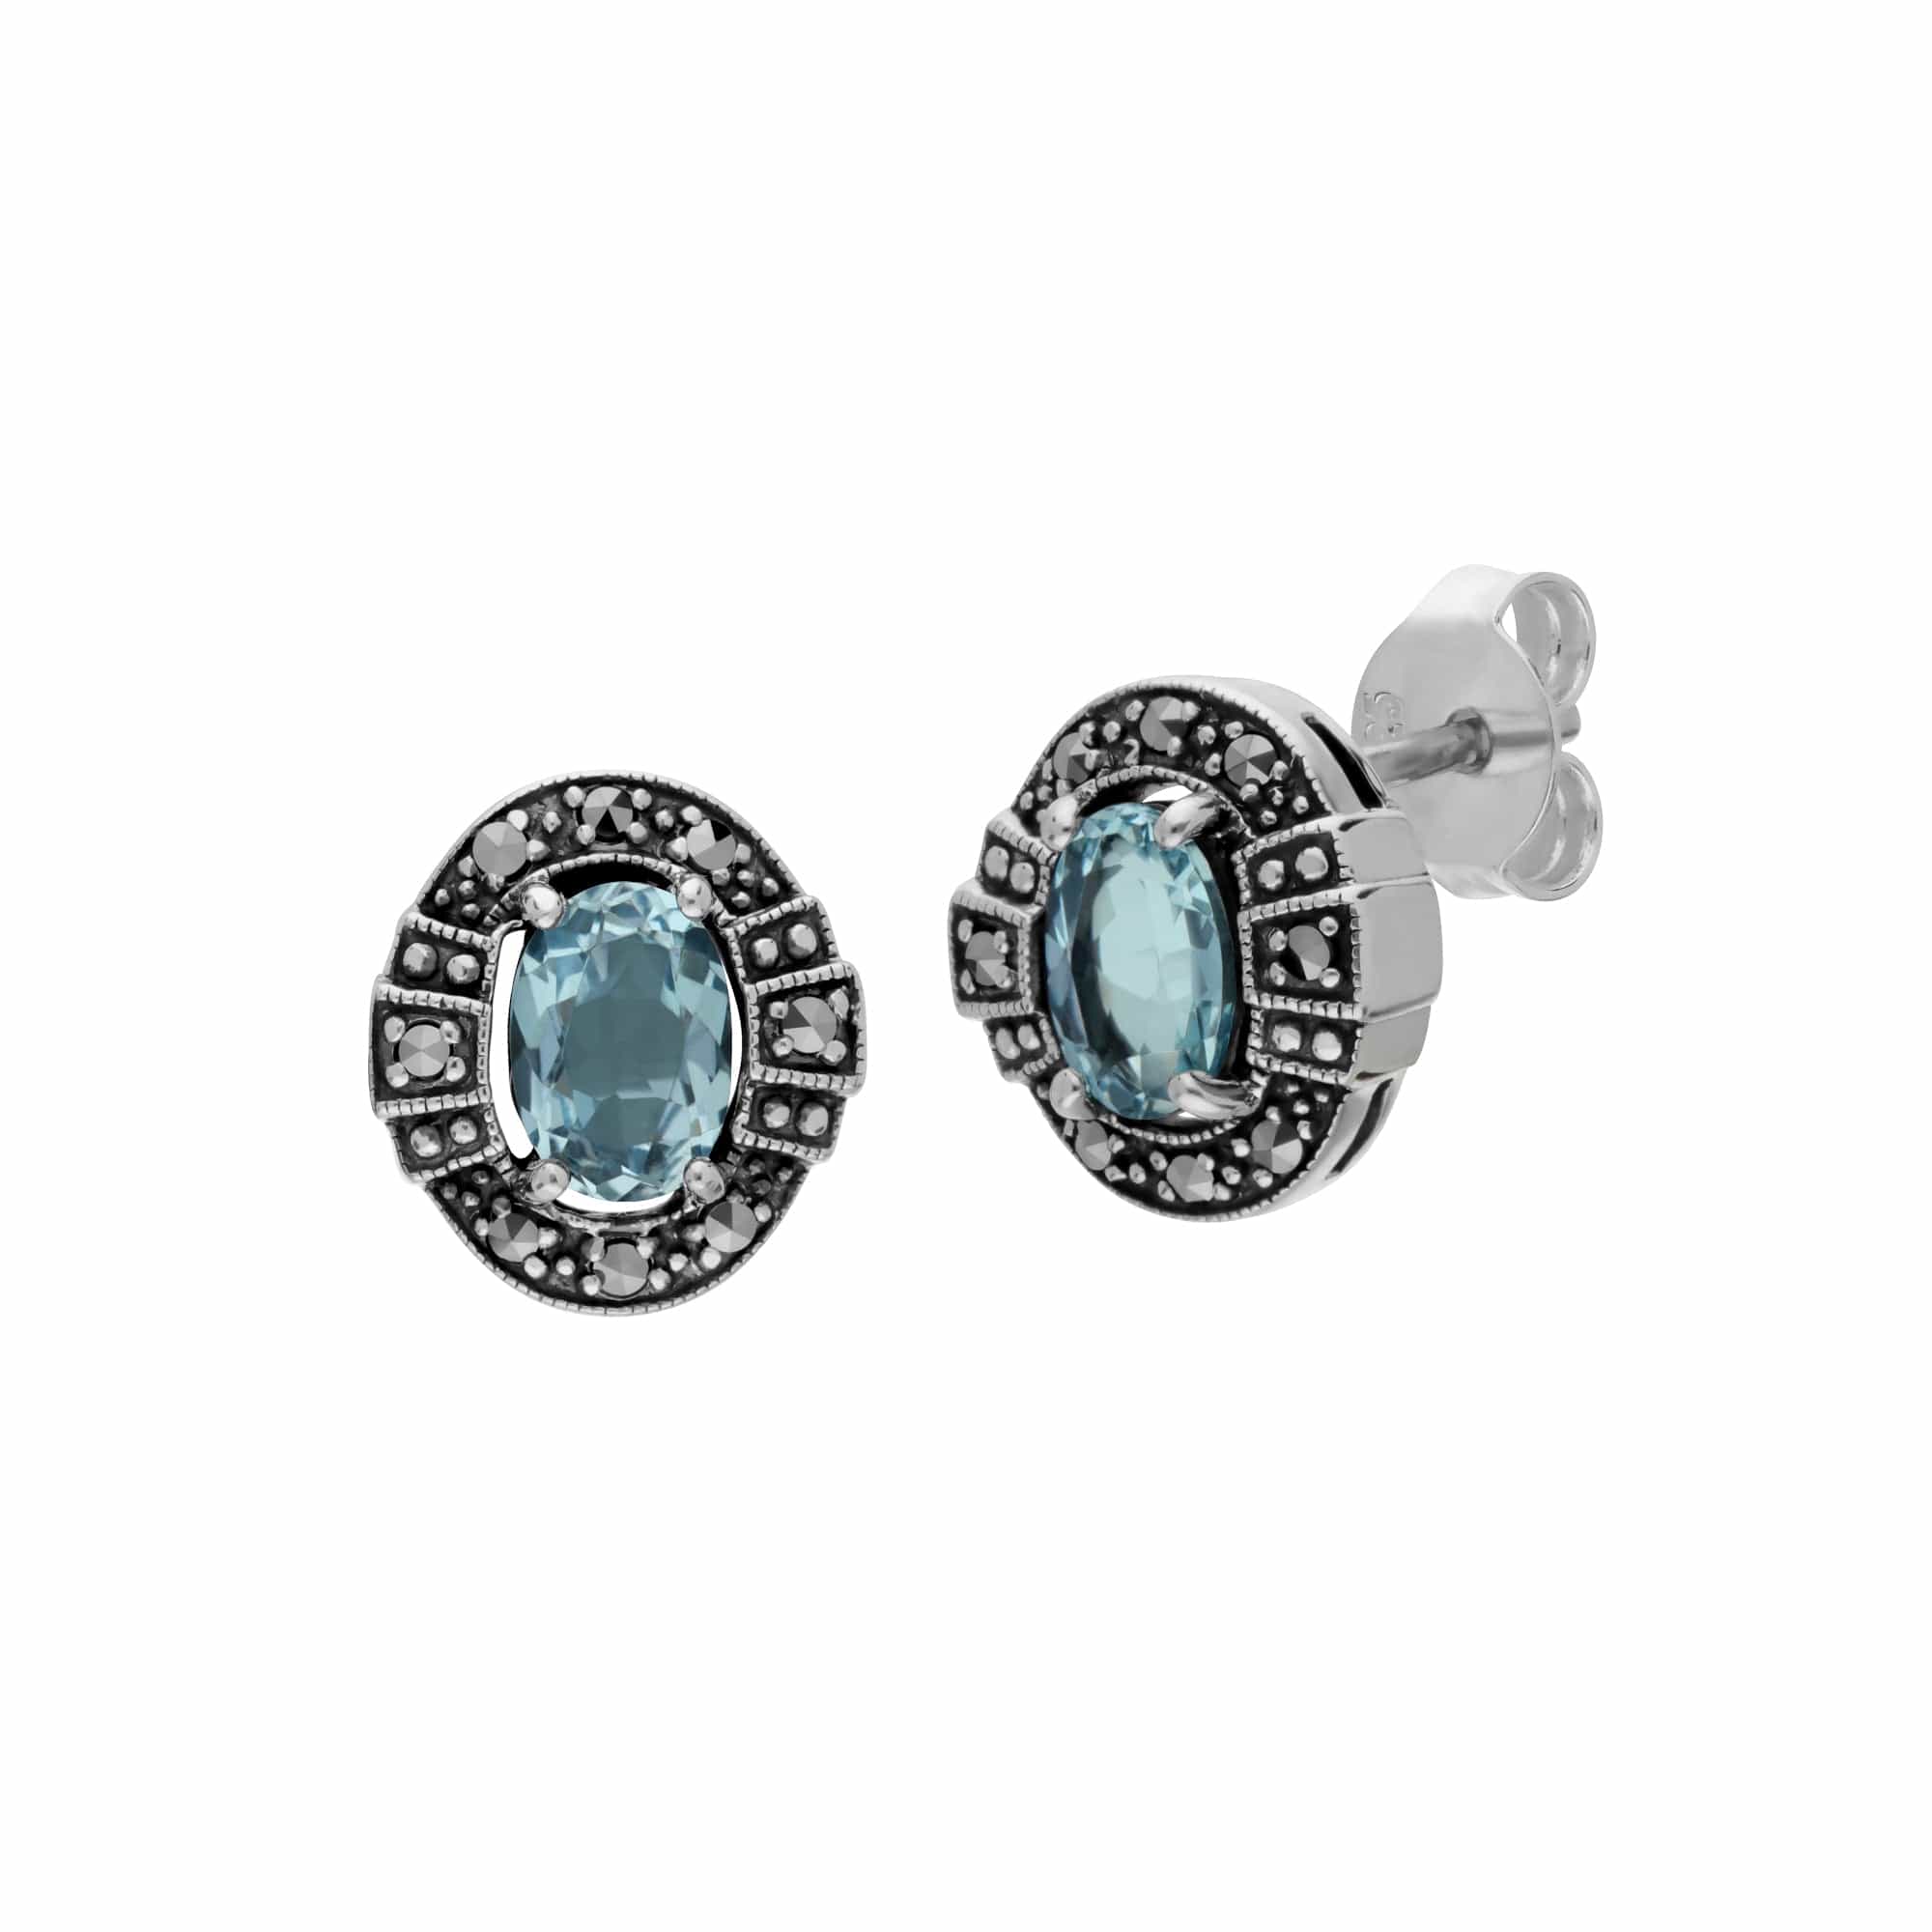 214E873001925-214L165401925 Art Deco Style Oval Blue Topaz and Marcasite Cluster Stud Earrings & Bracelet Set in 925 Sterling Silver 2